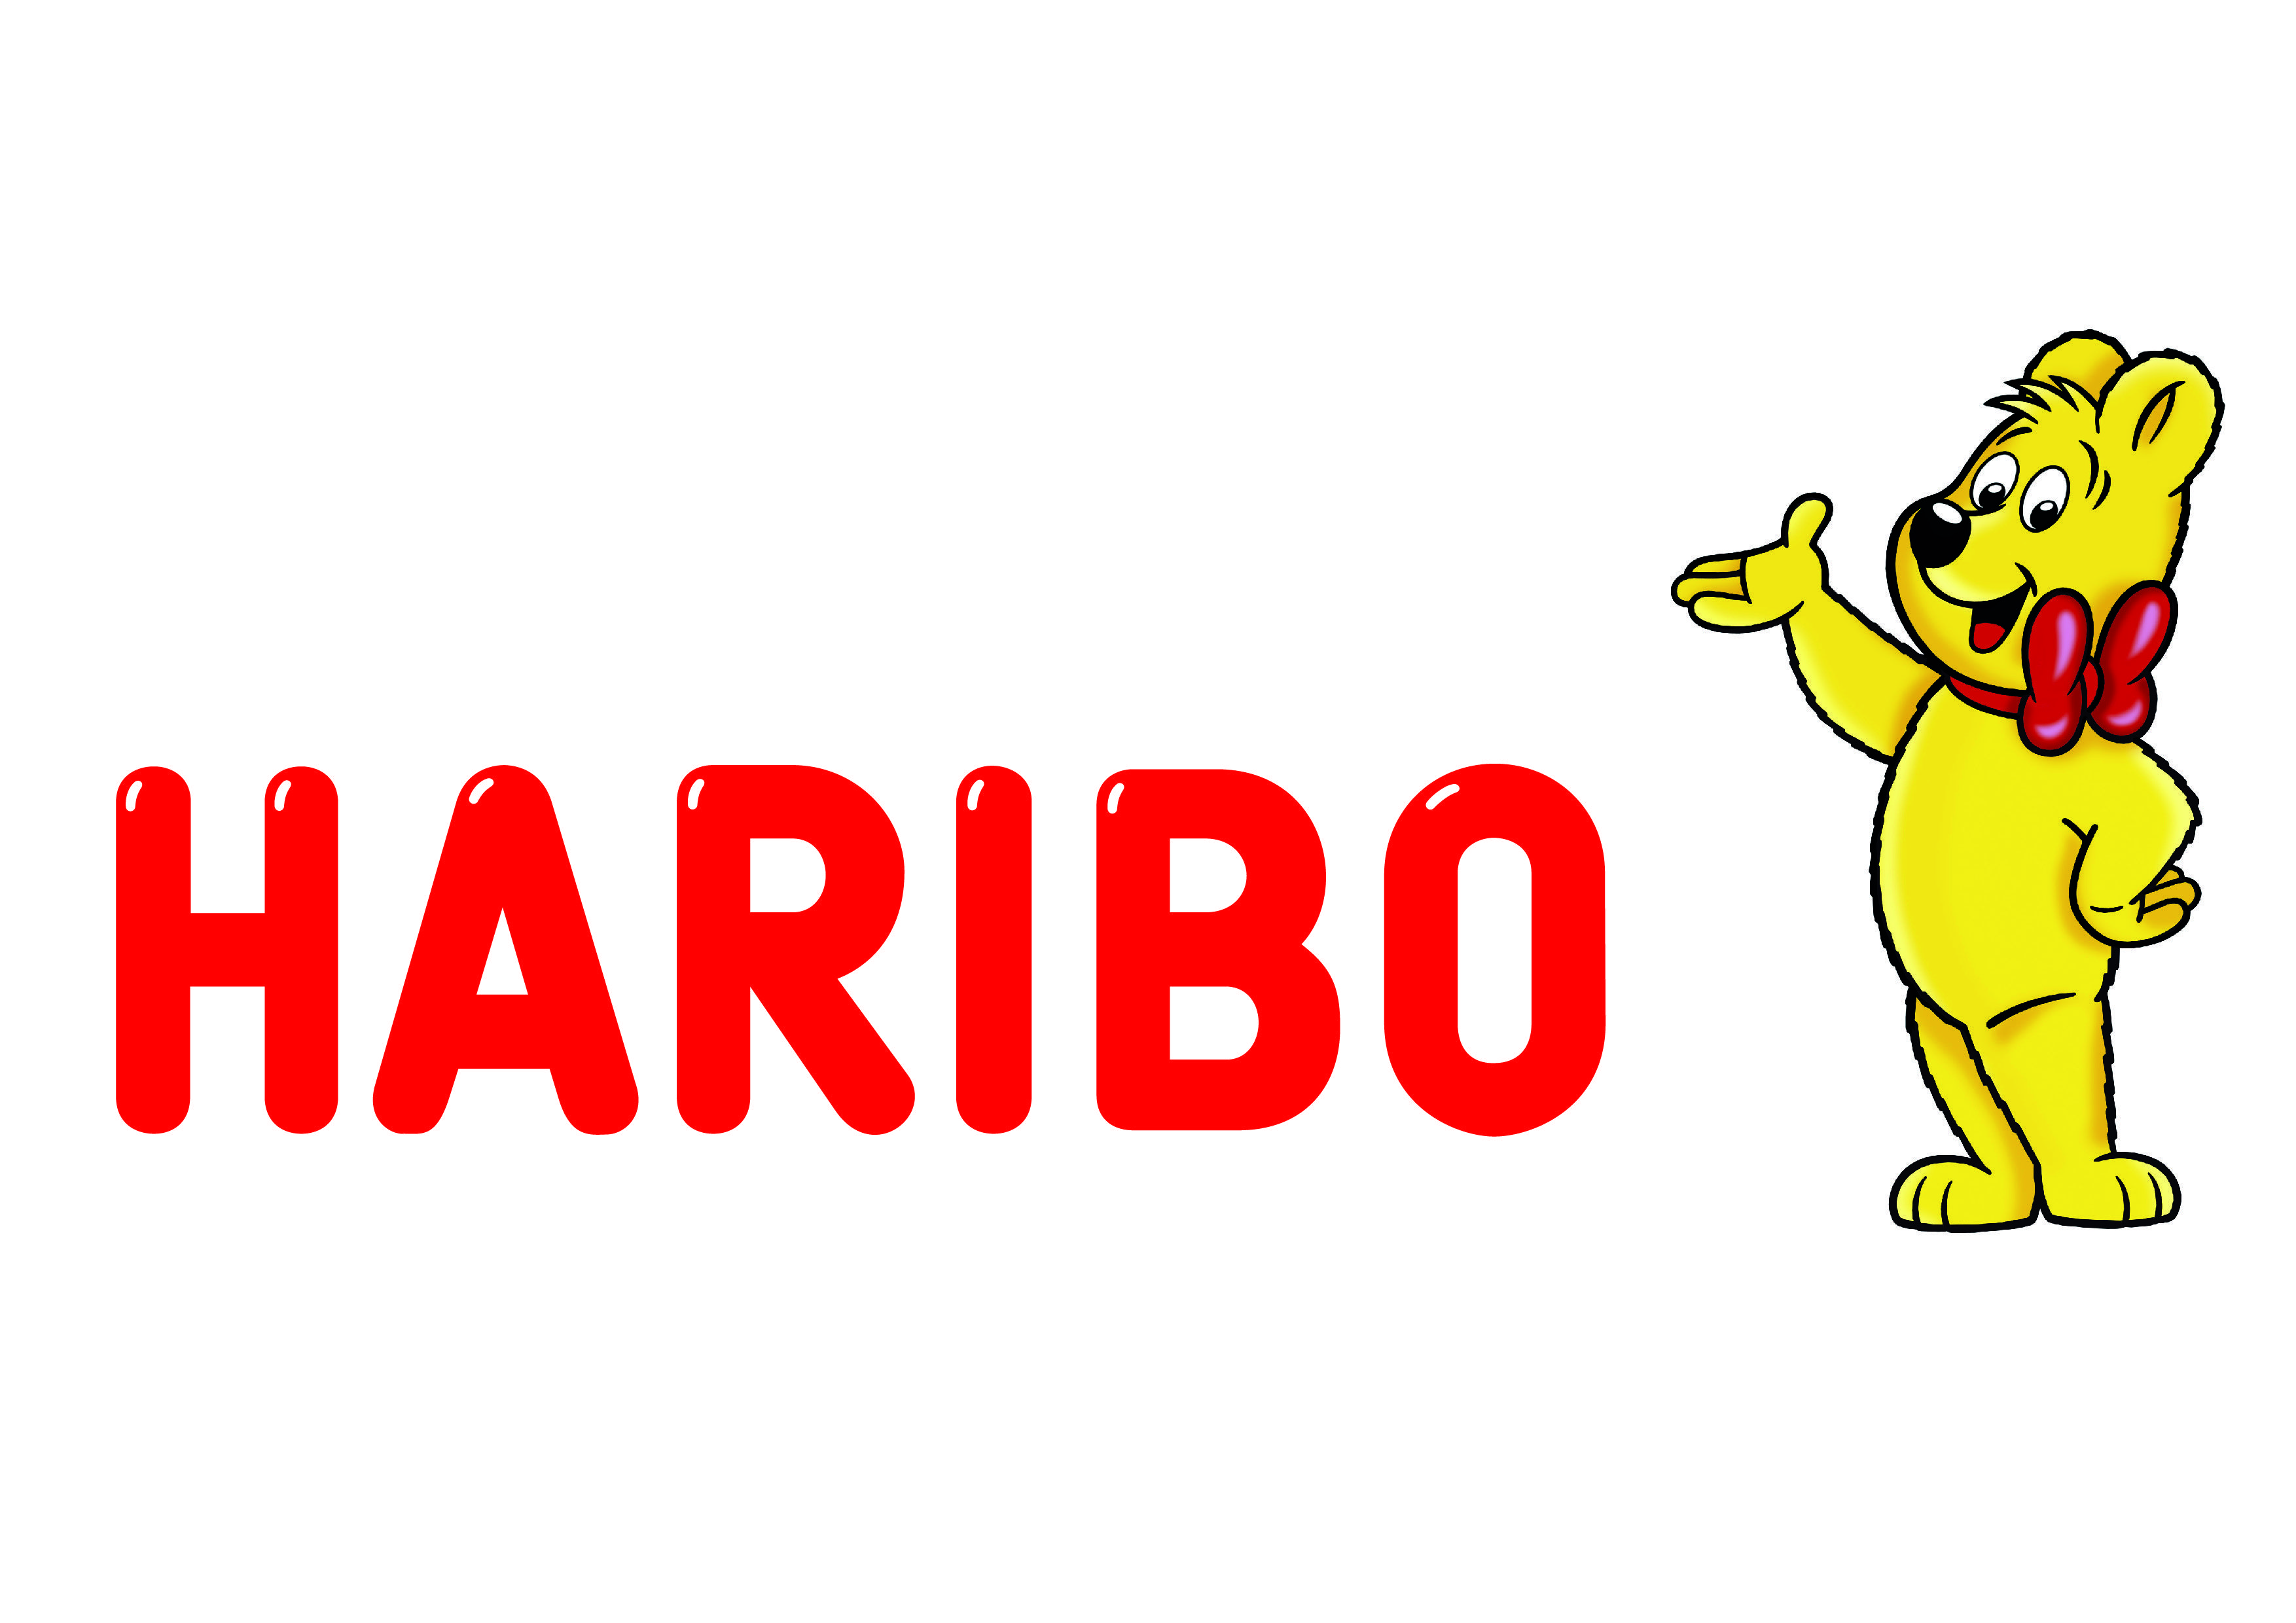 HARIBO logo